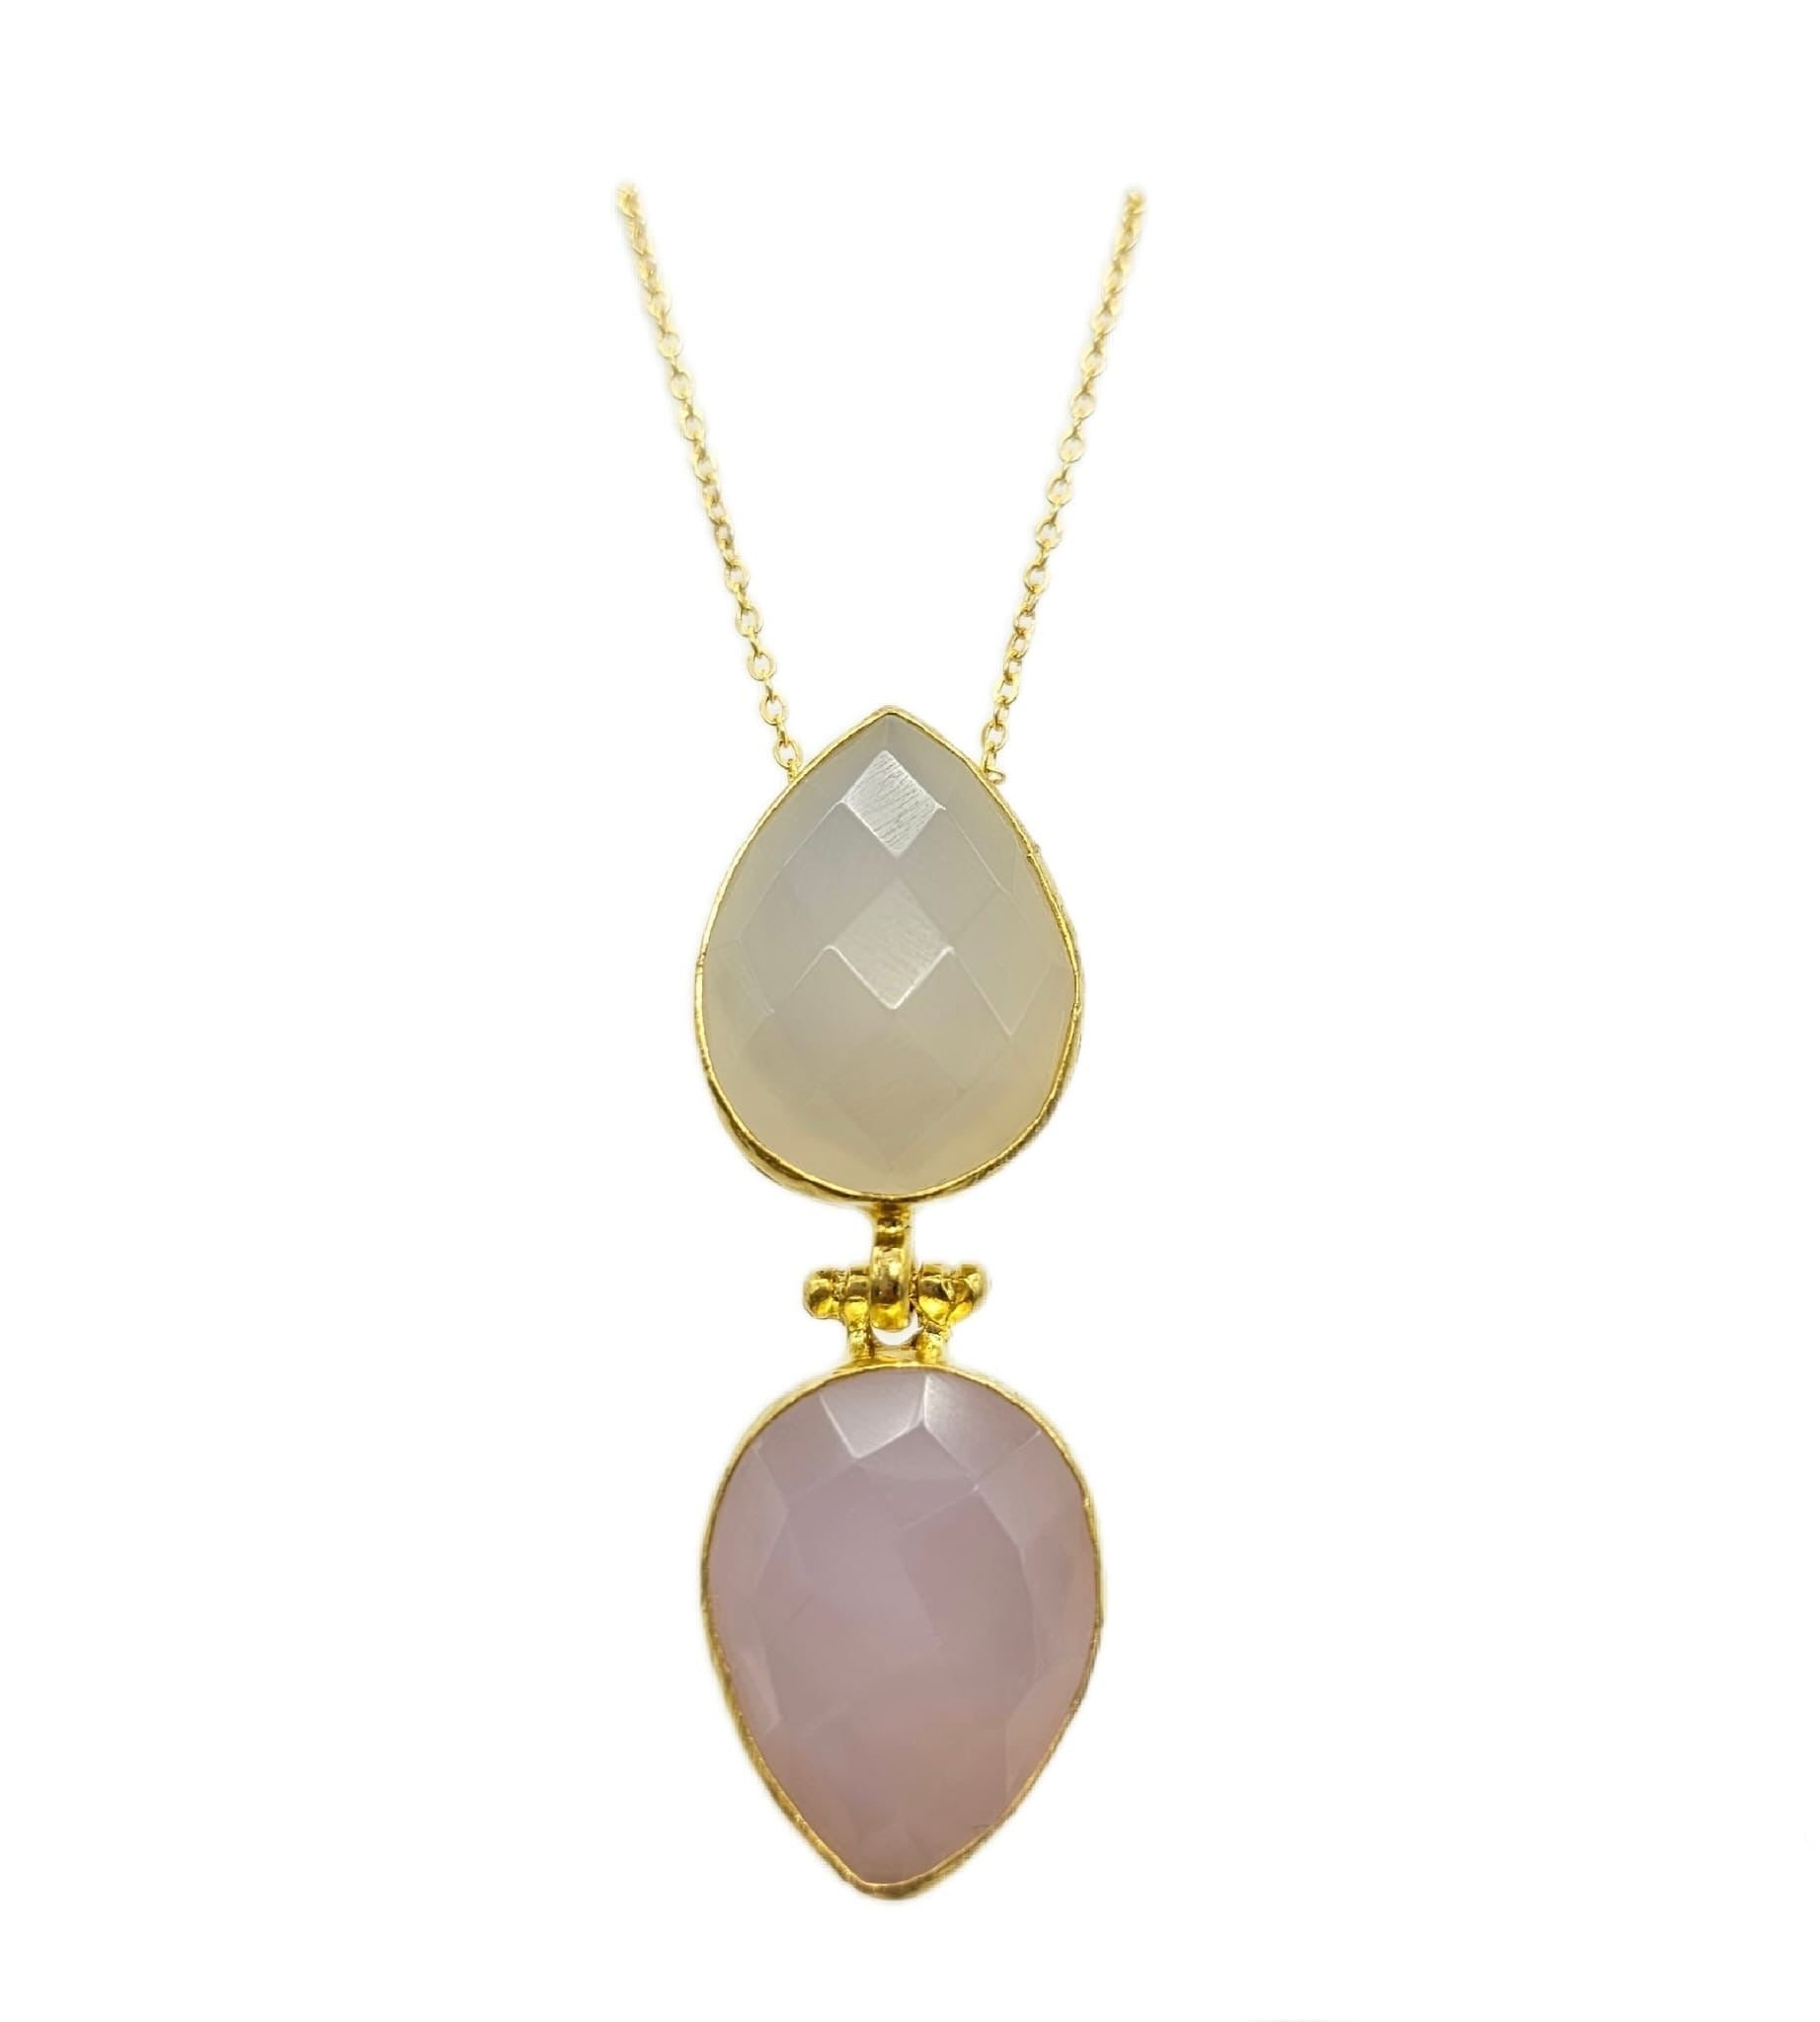 21k gold plated stunning double pendant necklace boasts teardrop faceted snow quartz and rose quartz gemstones